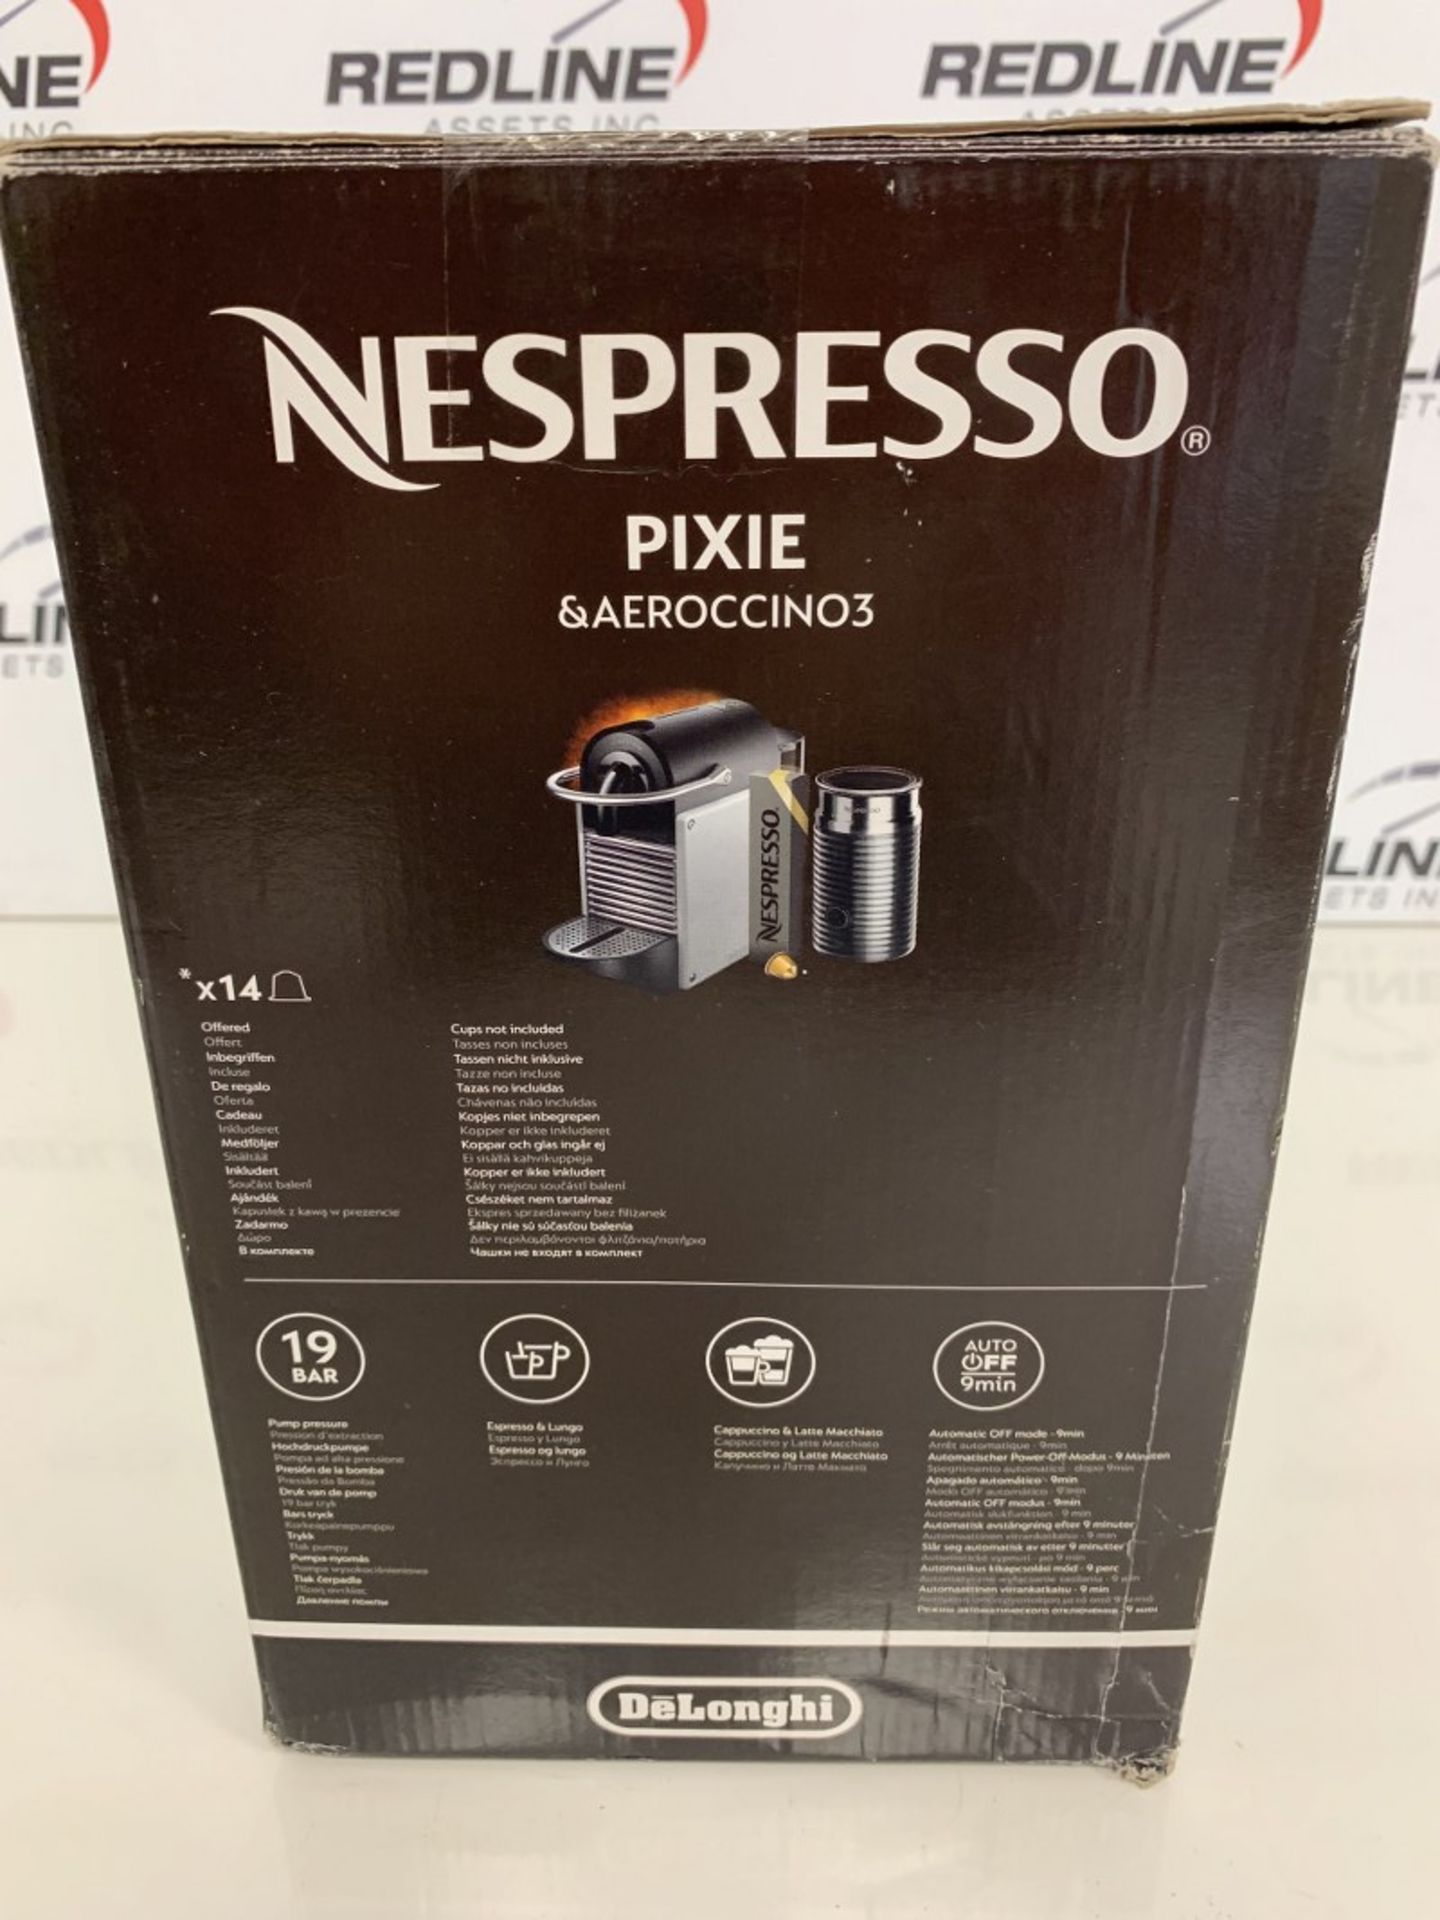 Delonghi - Nespresso - Pixie - Coffee Machine - Image 2 of 3